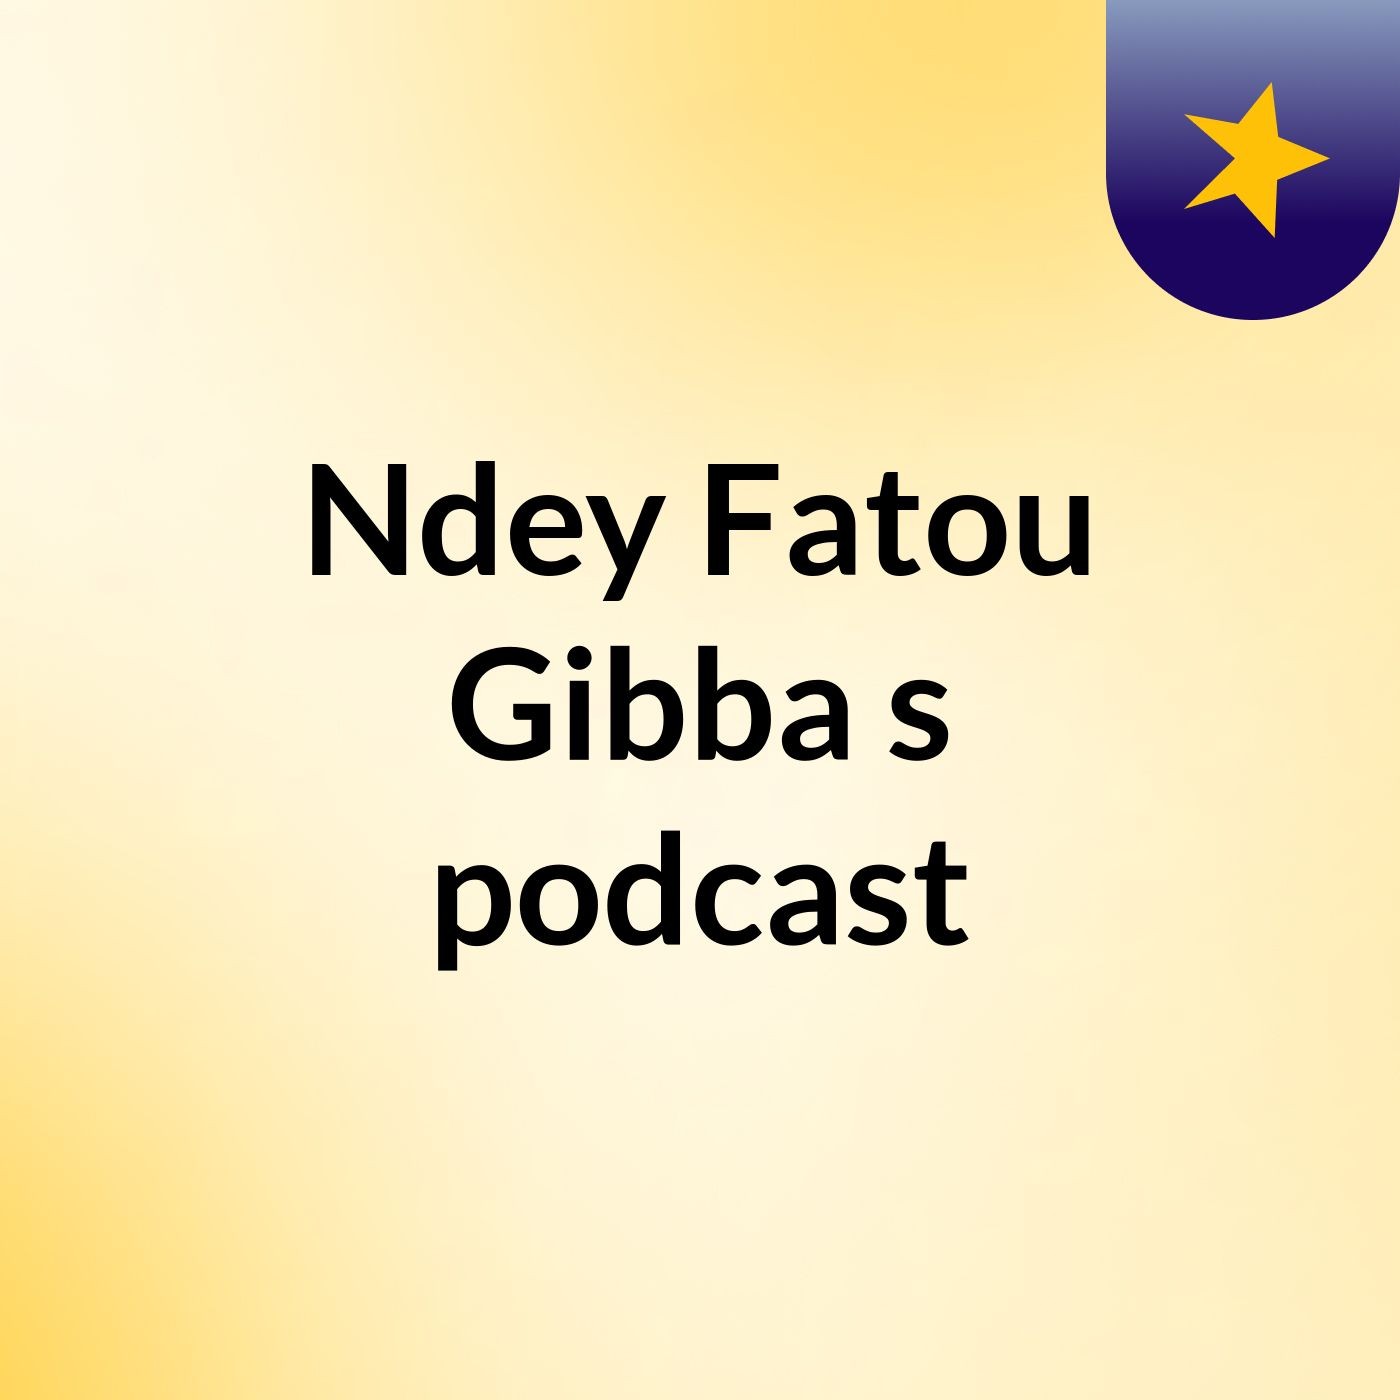 Ndey Fatou Gibba's podcast